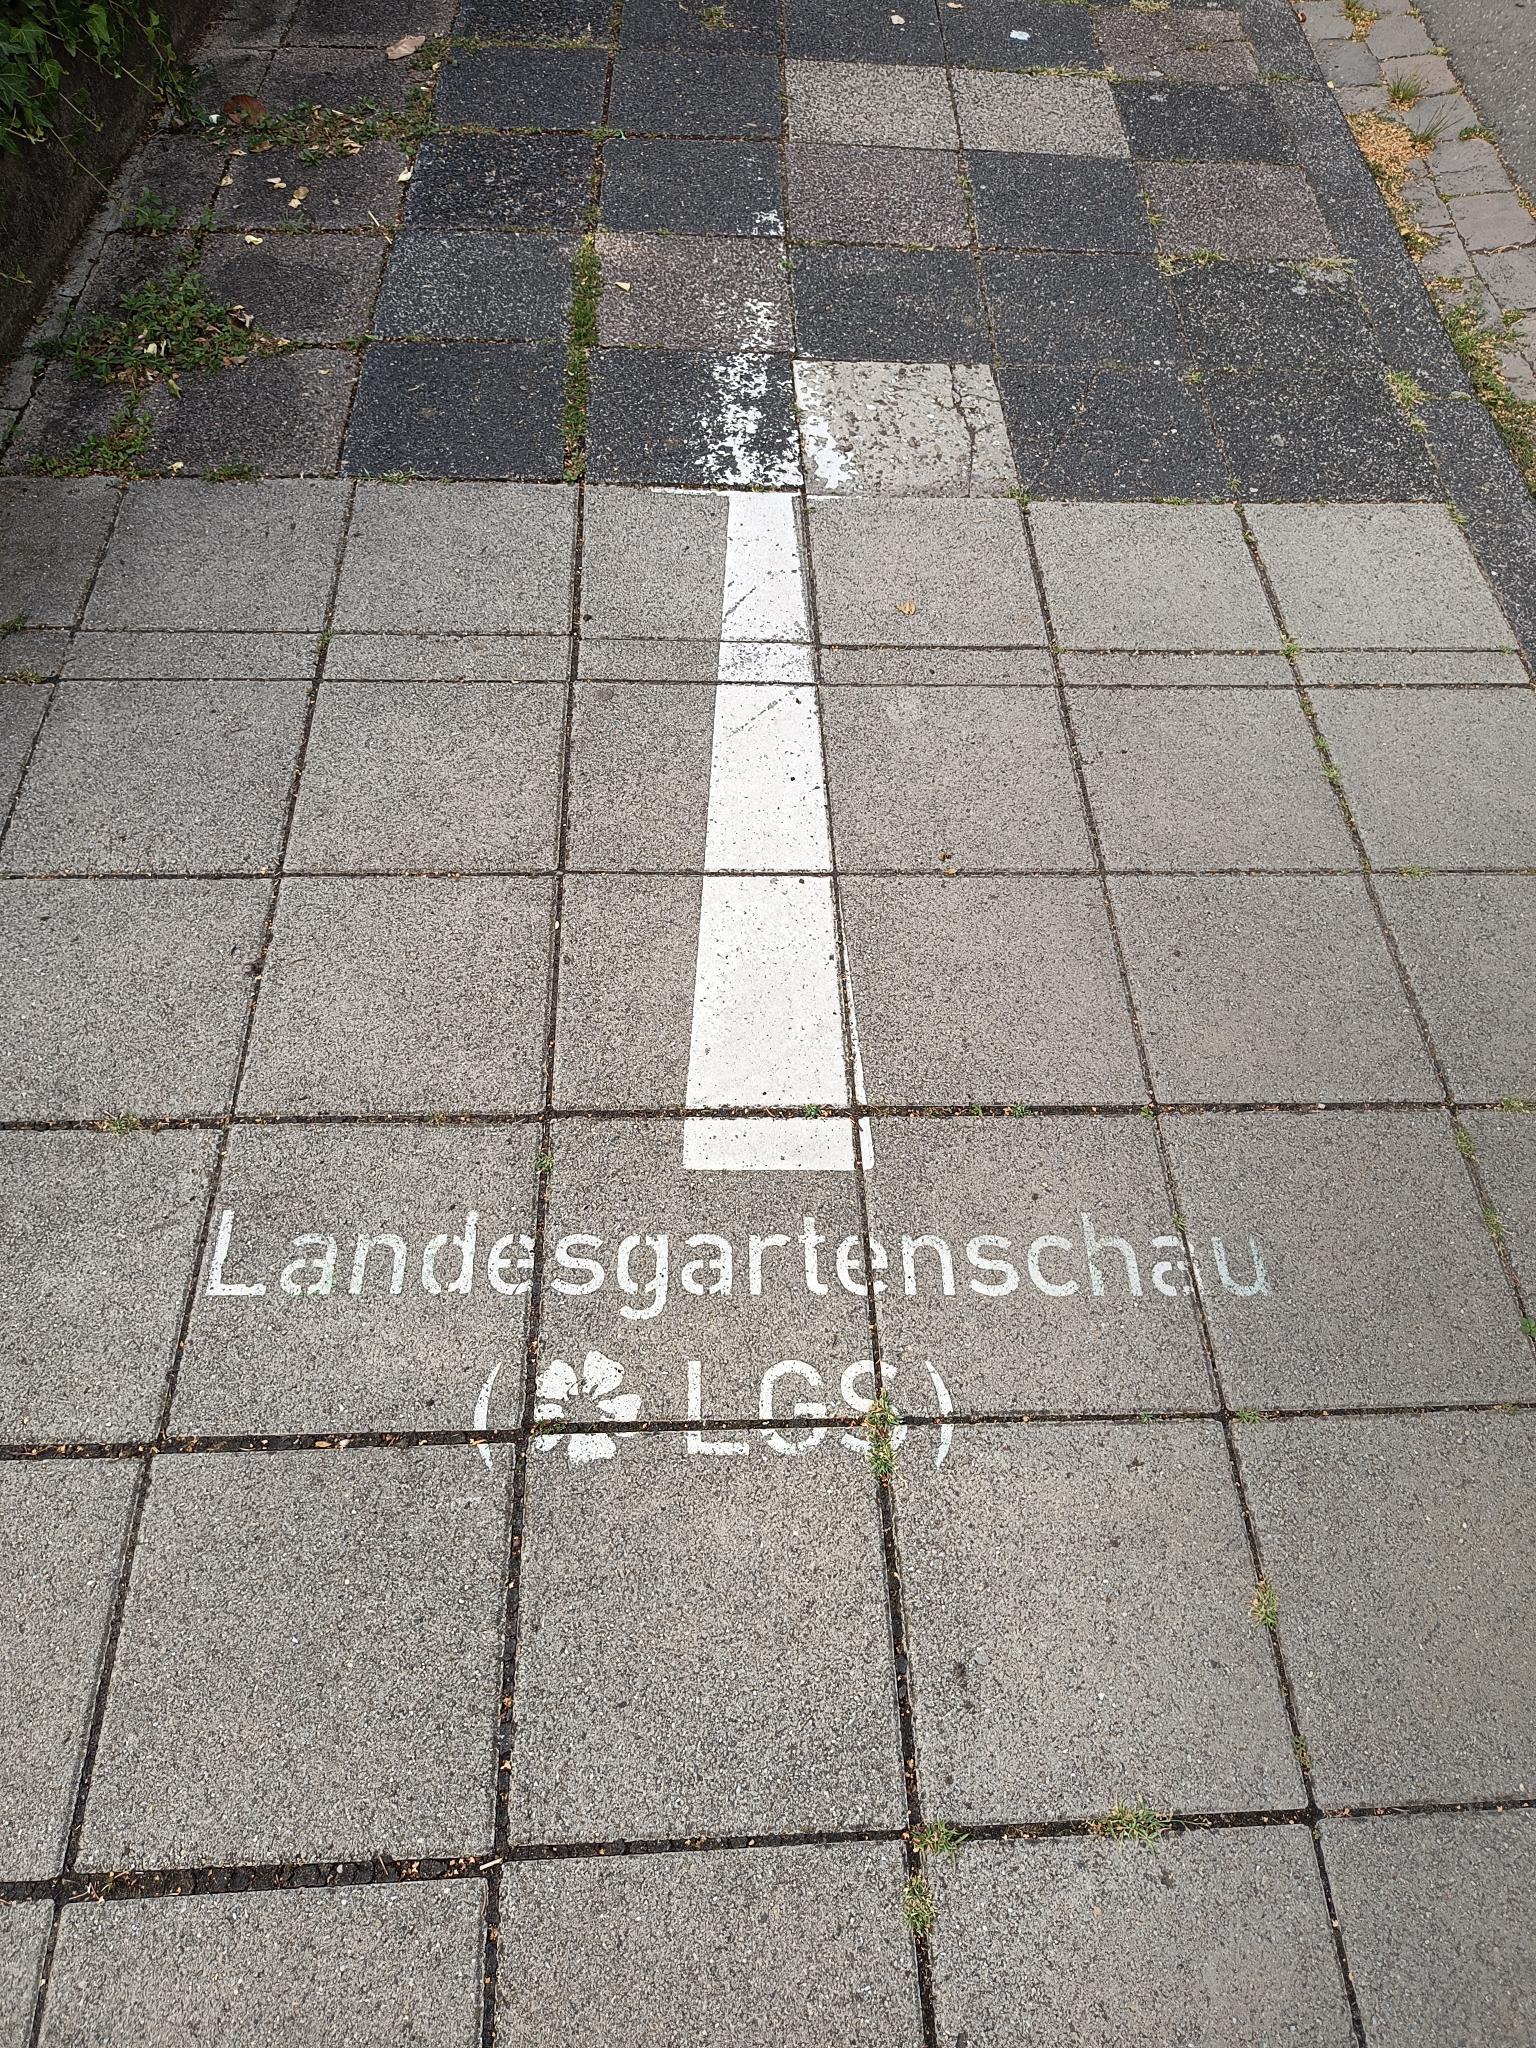 Datei:LGS-Wegweiser Bürgerstraße Landau.jpeg